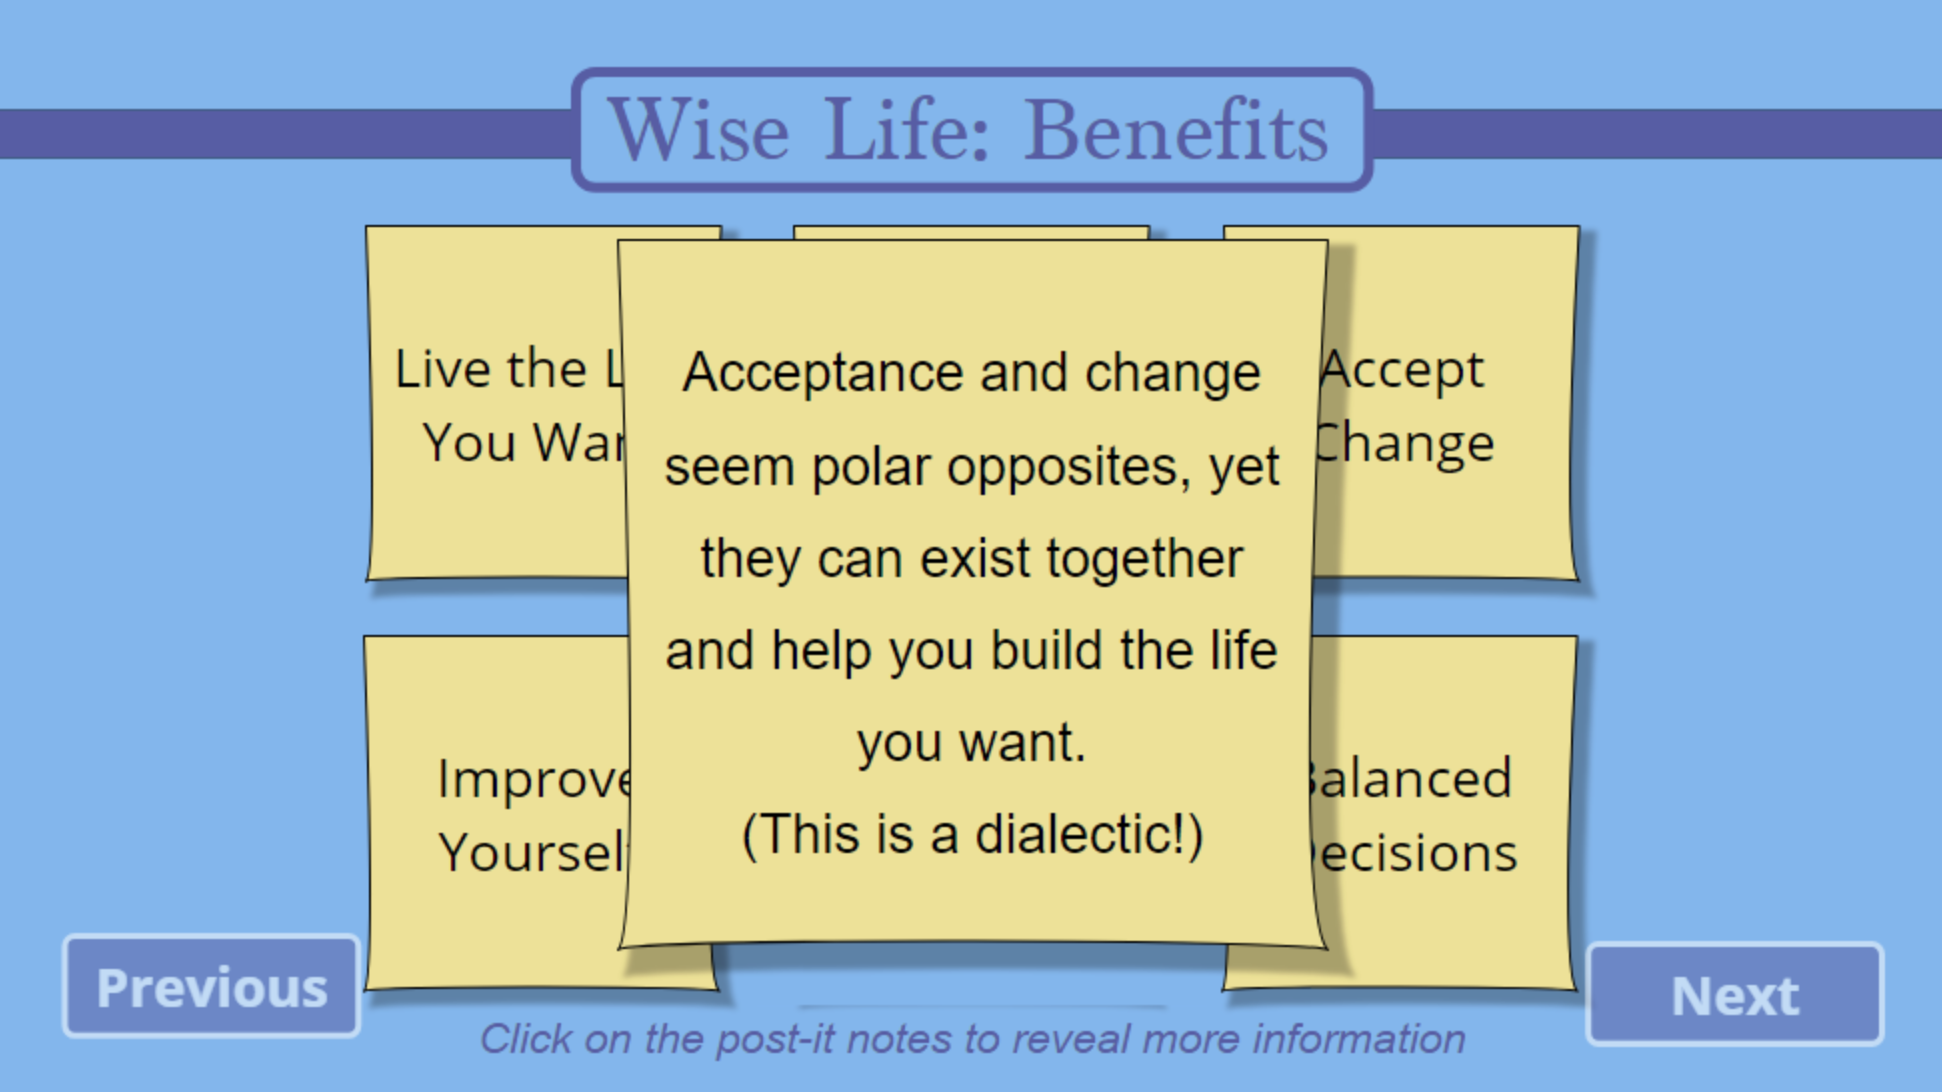 Wise Life: Benefits